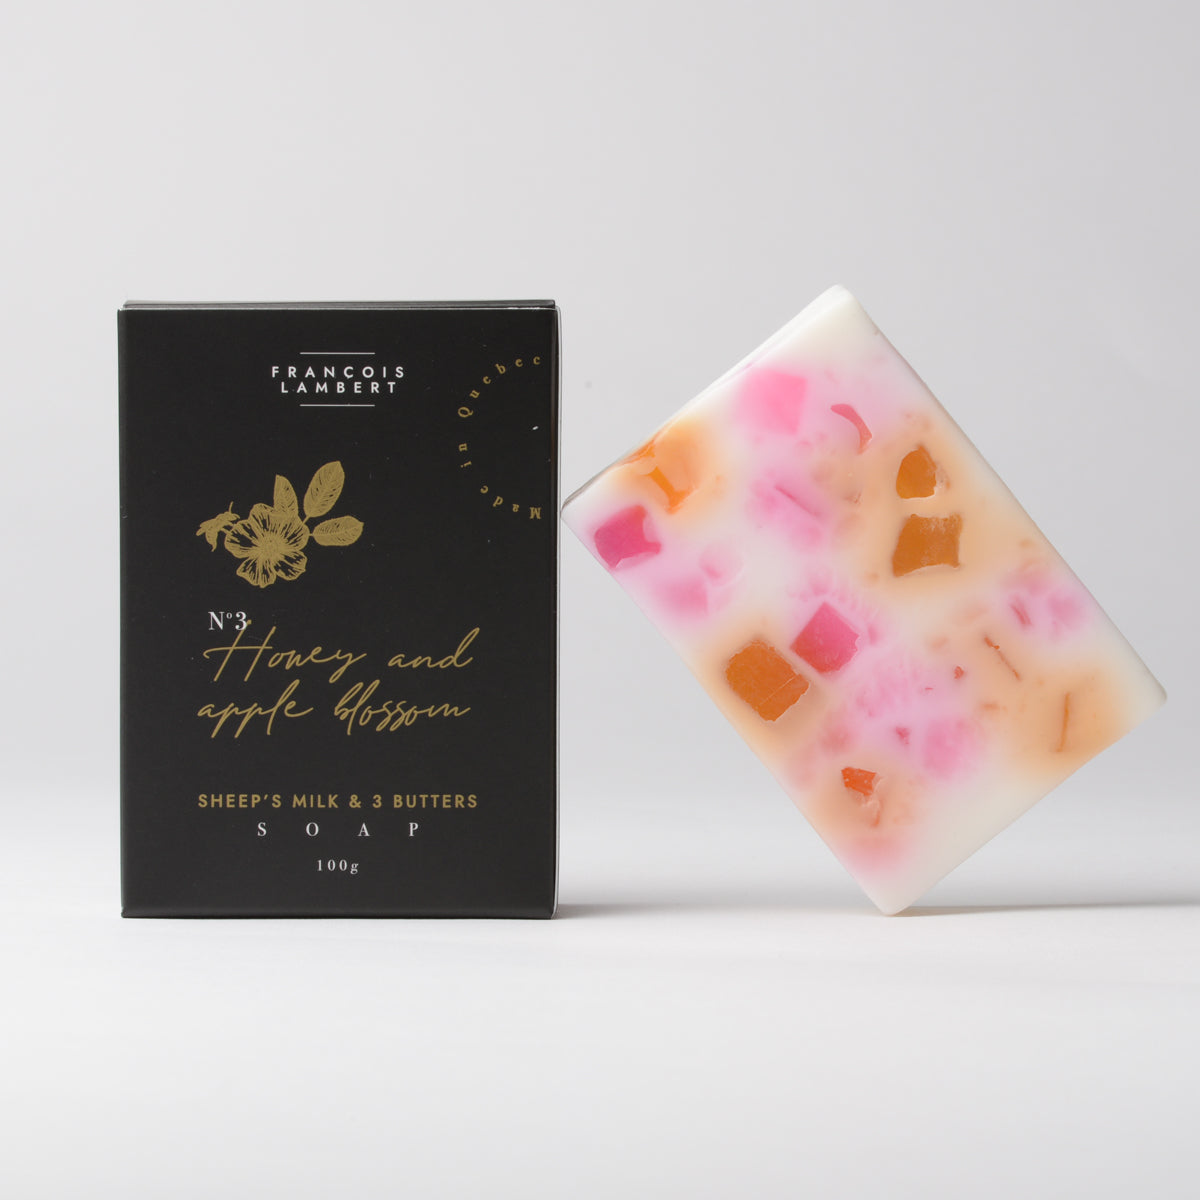 No. 3 Sheep's milk soap - Honey and apple blossoms